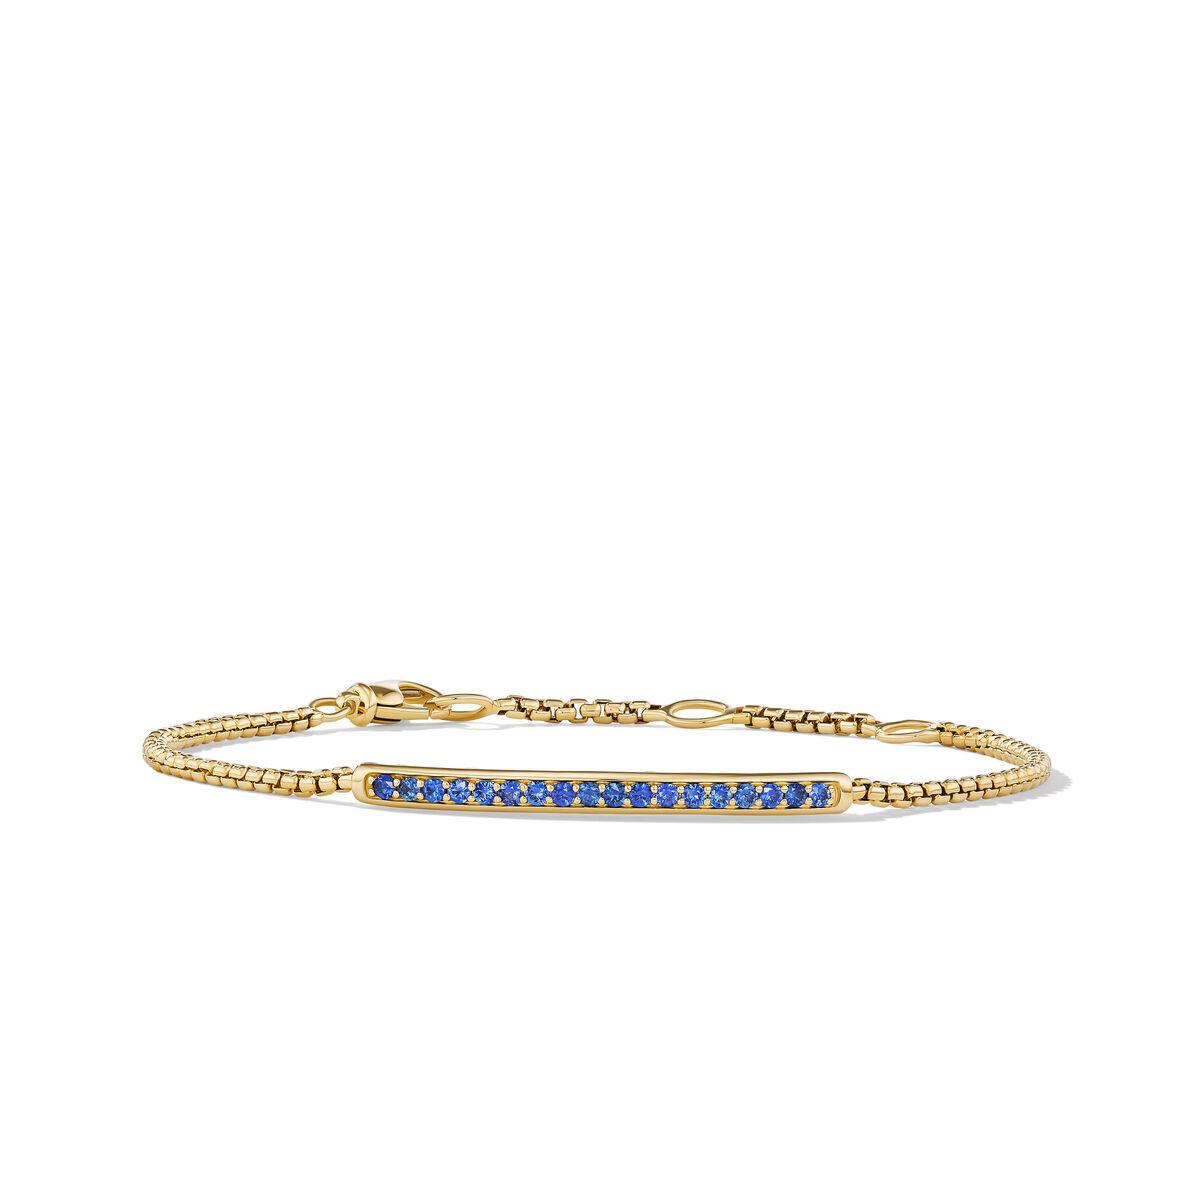 David Yurman Petite Pavé Bar Bracelet in 18K Yellow Gold with Blue Sapphires 0